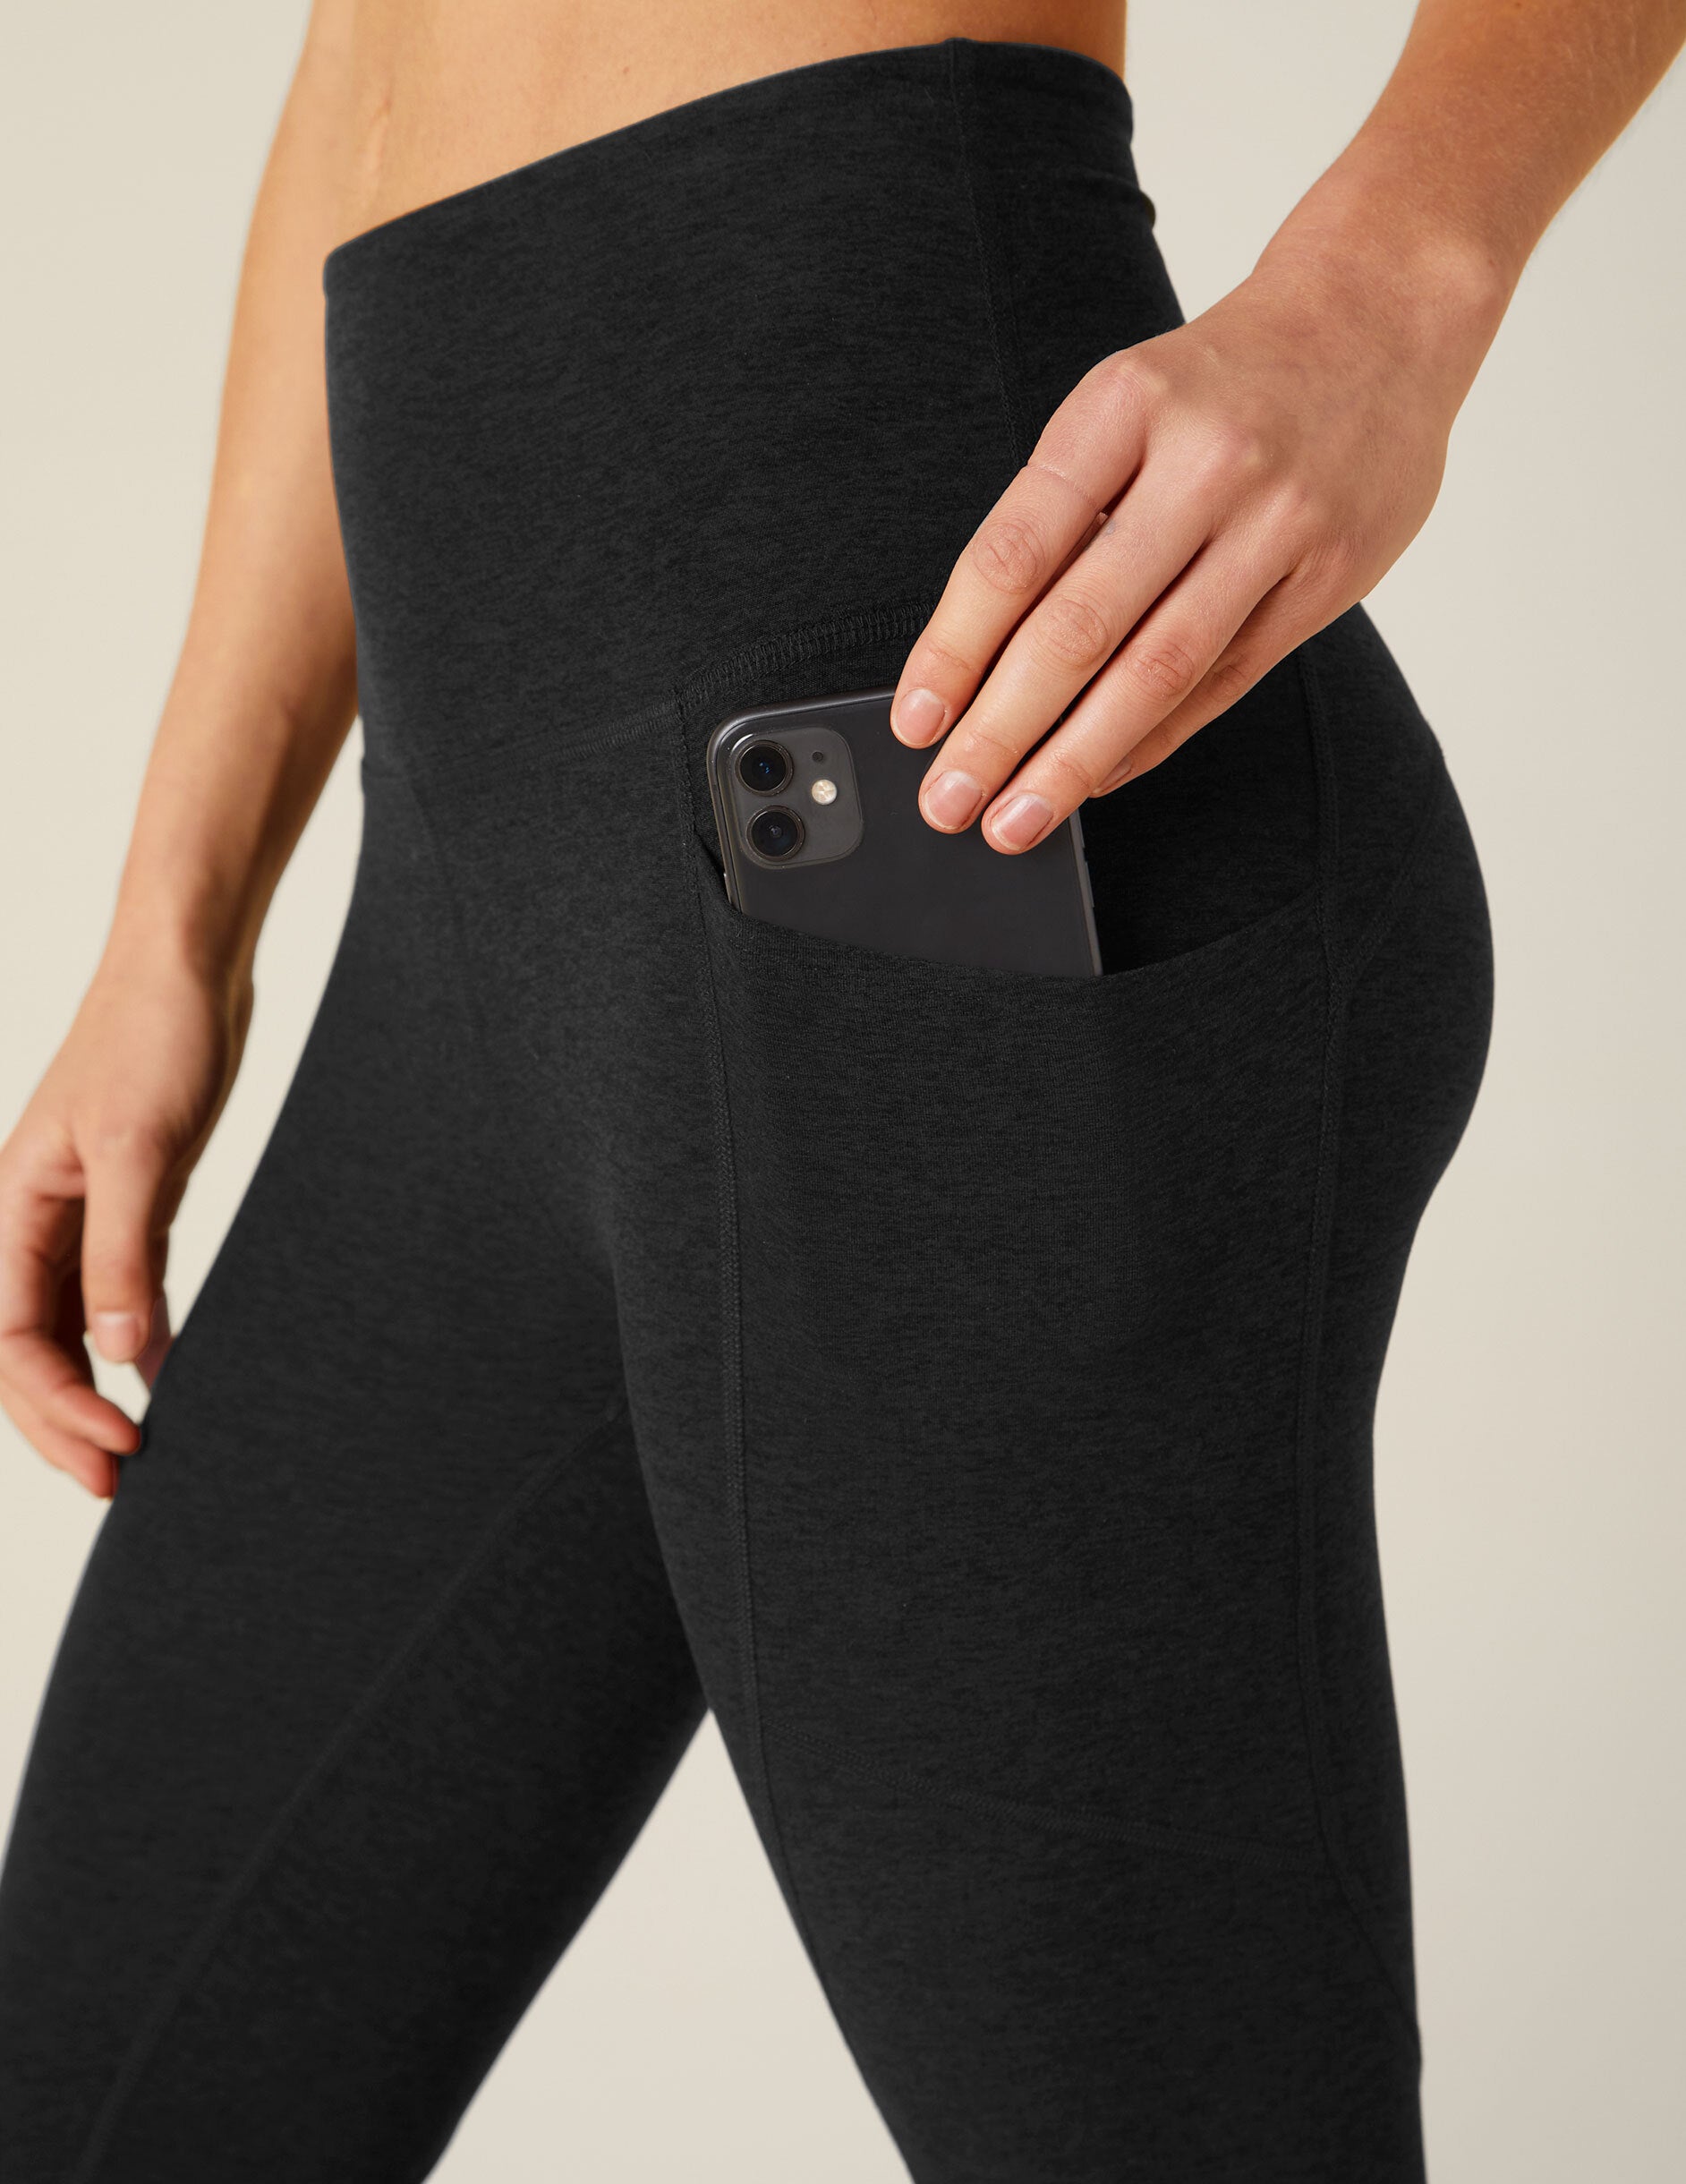 Plus Size Yoga Pants With Pockets Australia Time